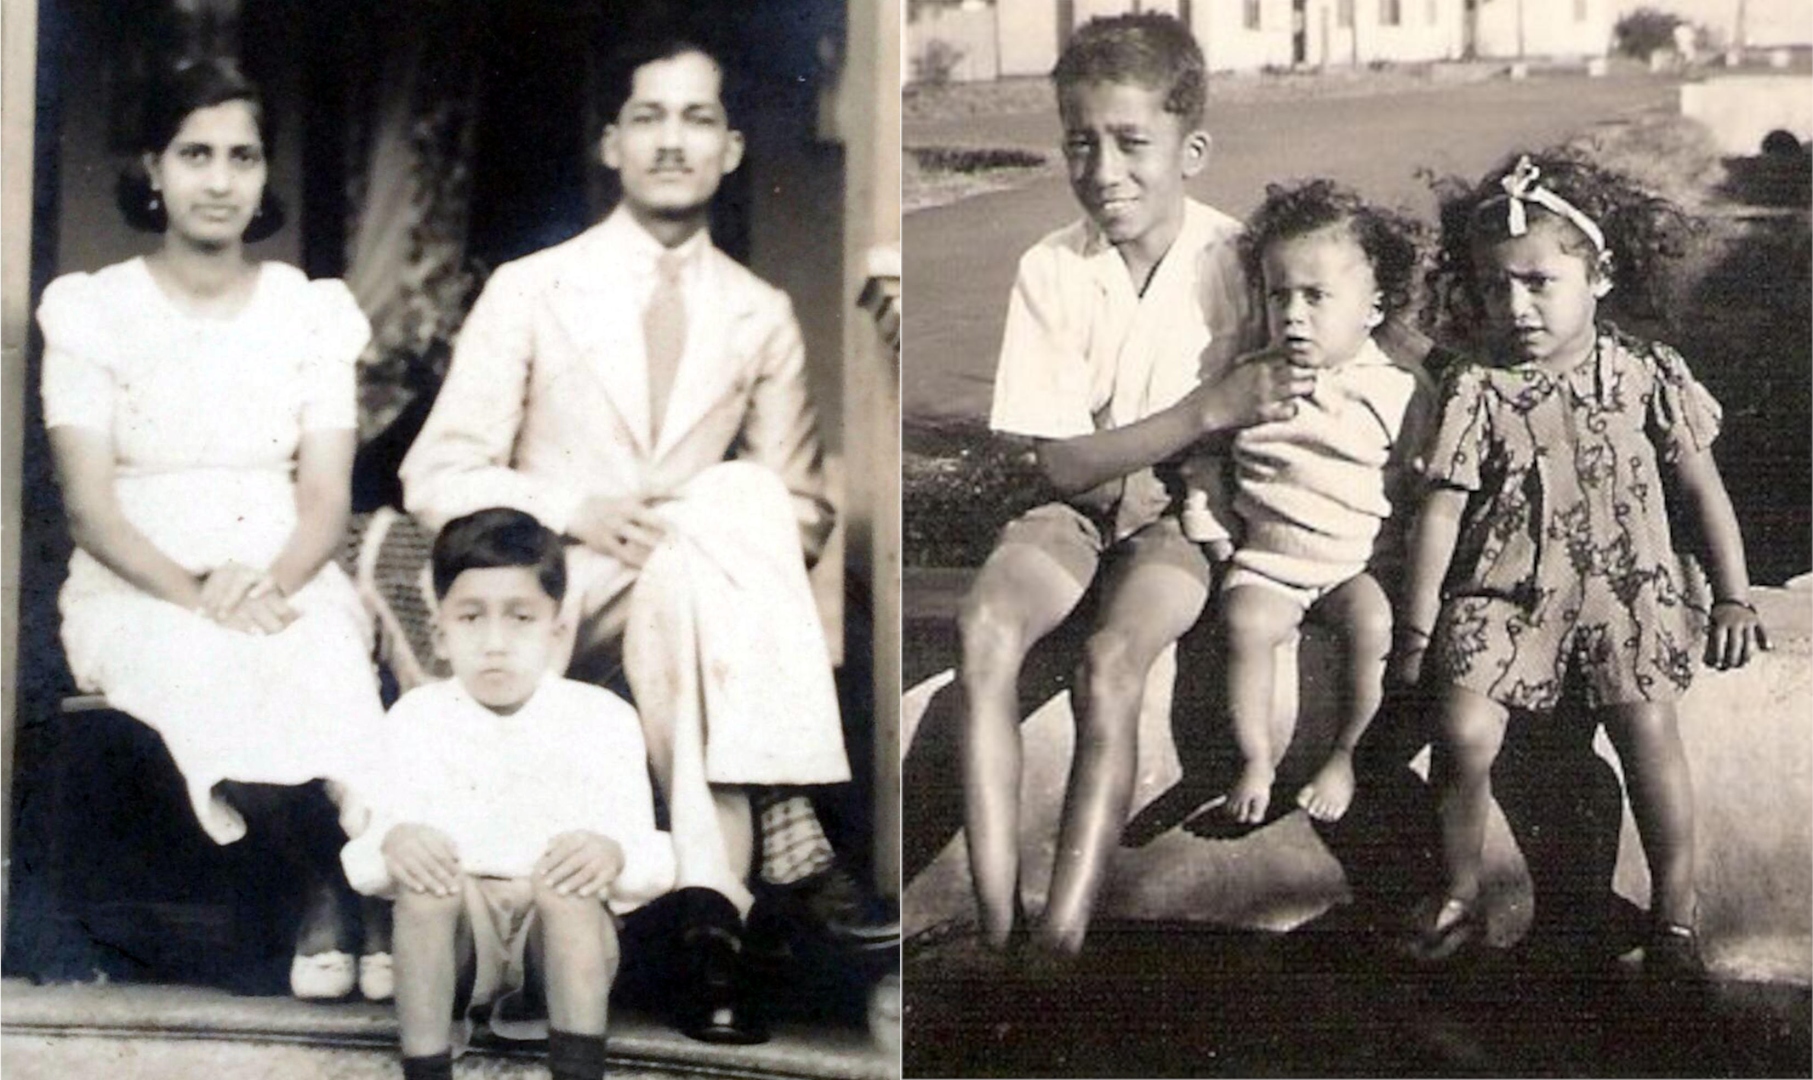 A World War II tragedy that orphaned 3 Goans